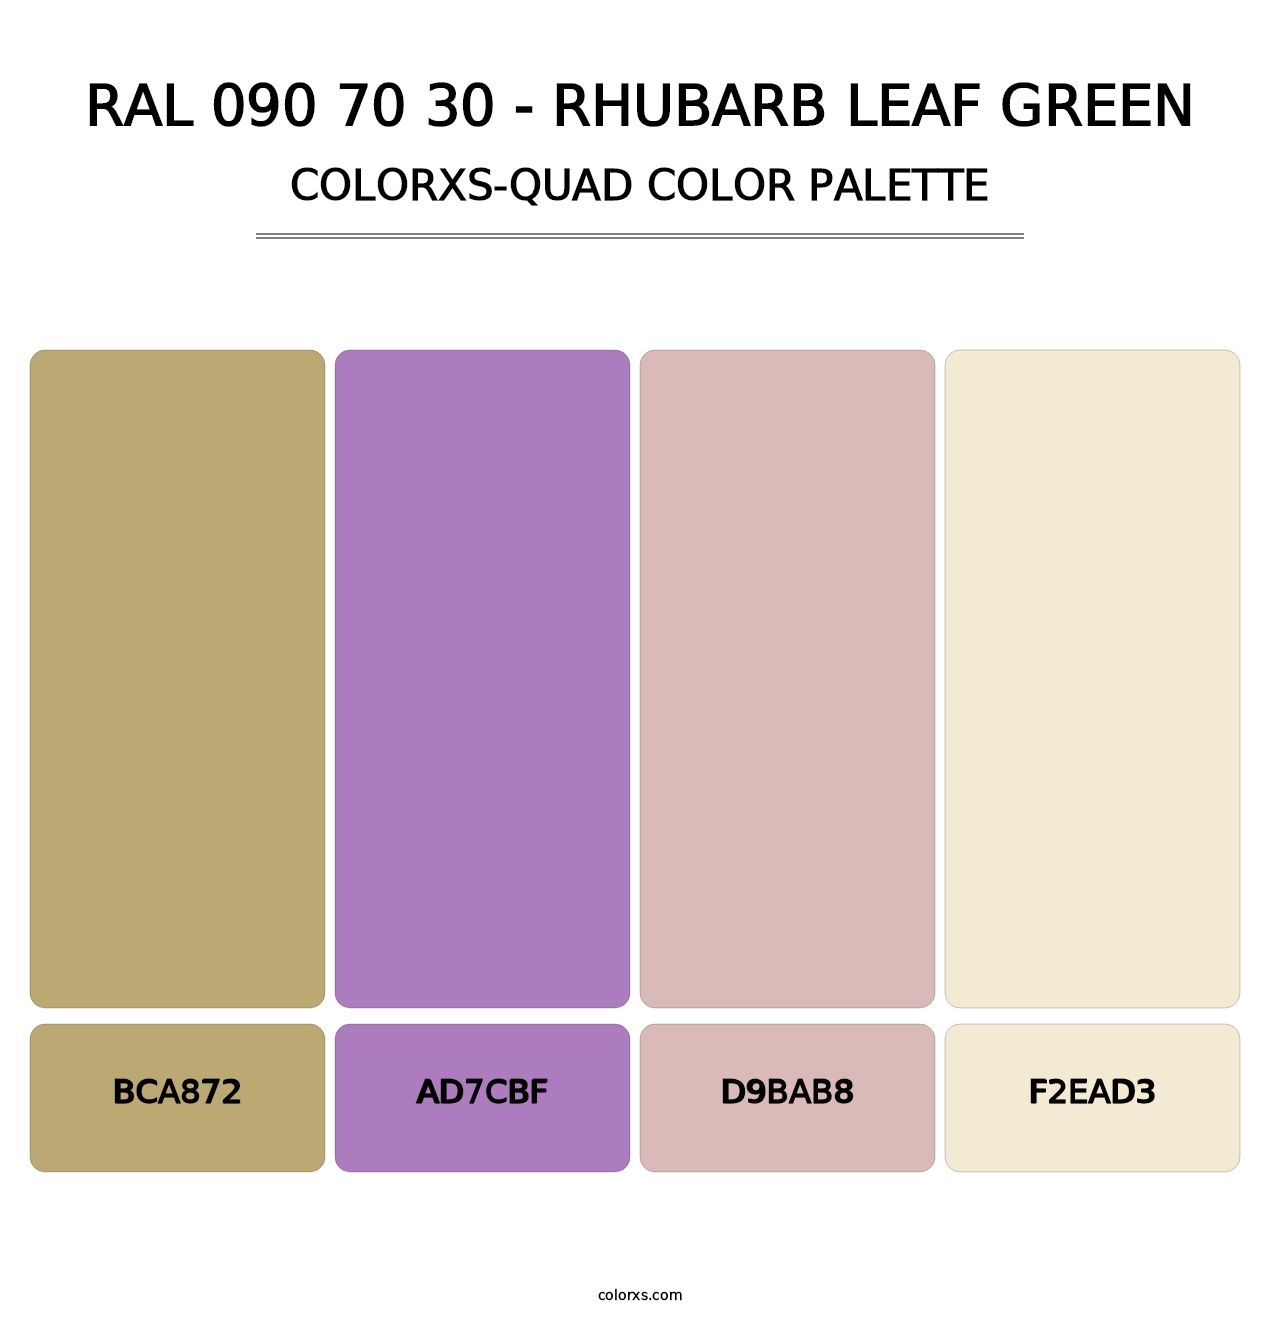 RAL 090 70 30 - Rhubarb Leaf Green - Colorxs Quad Palette